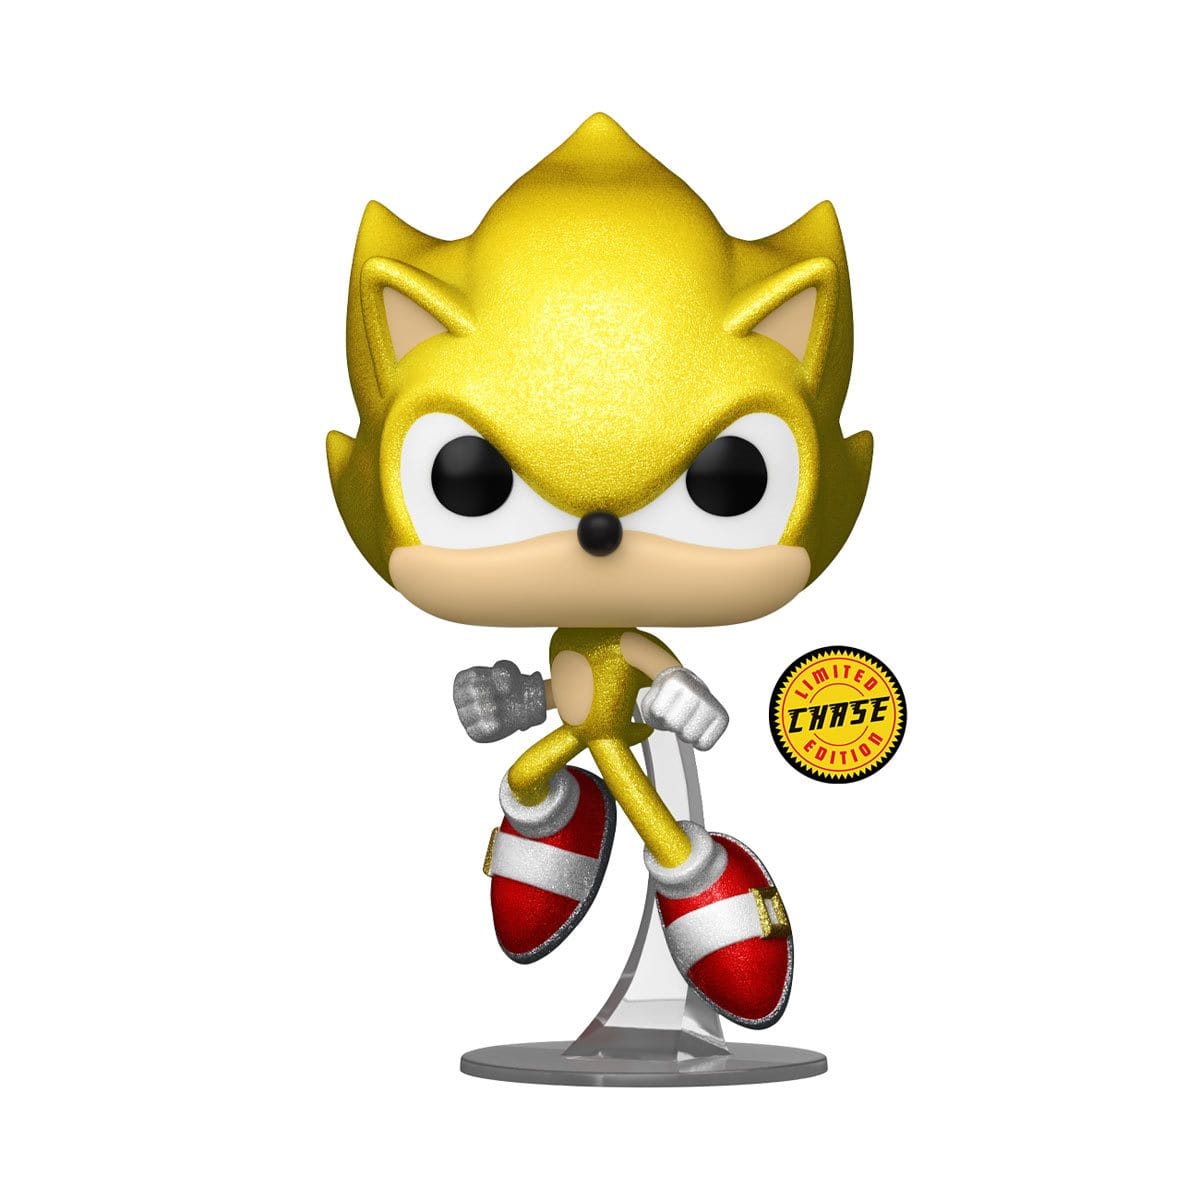 Funko Pop! Sonic the Hedgehog Super Sonic  Vinyl Figure 923 - AAA Anime Exclusive